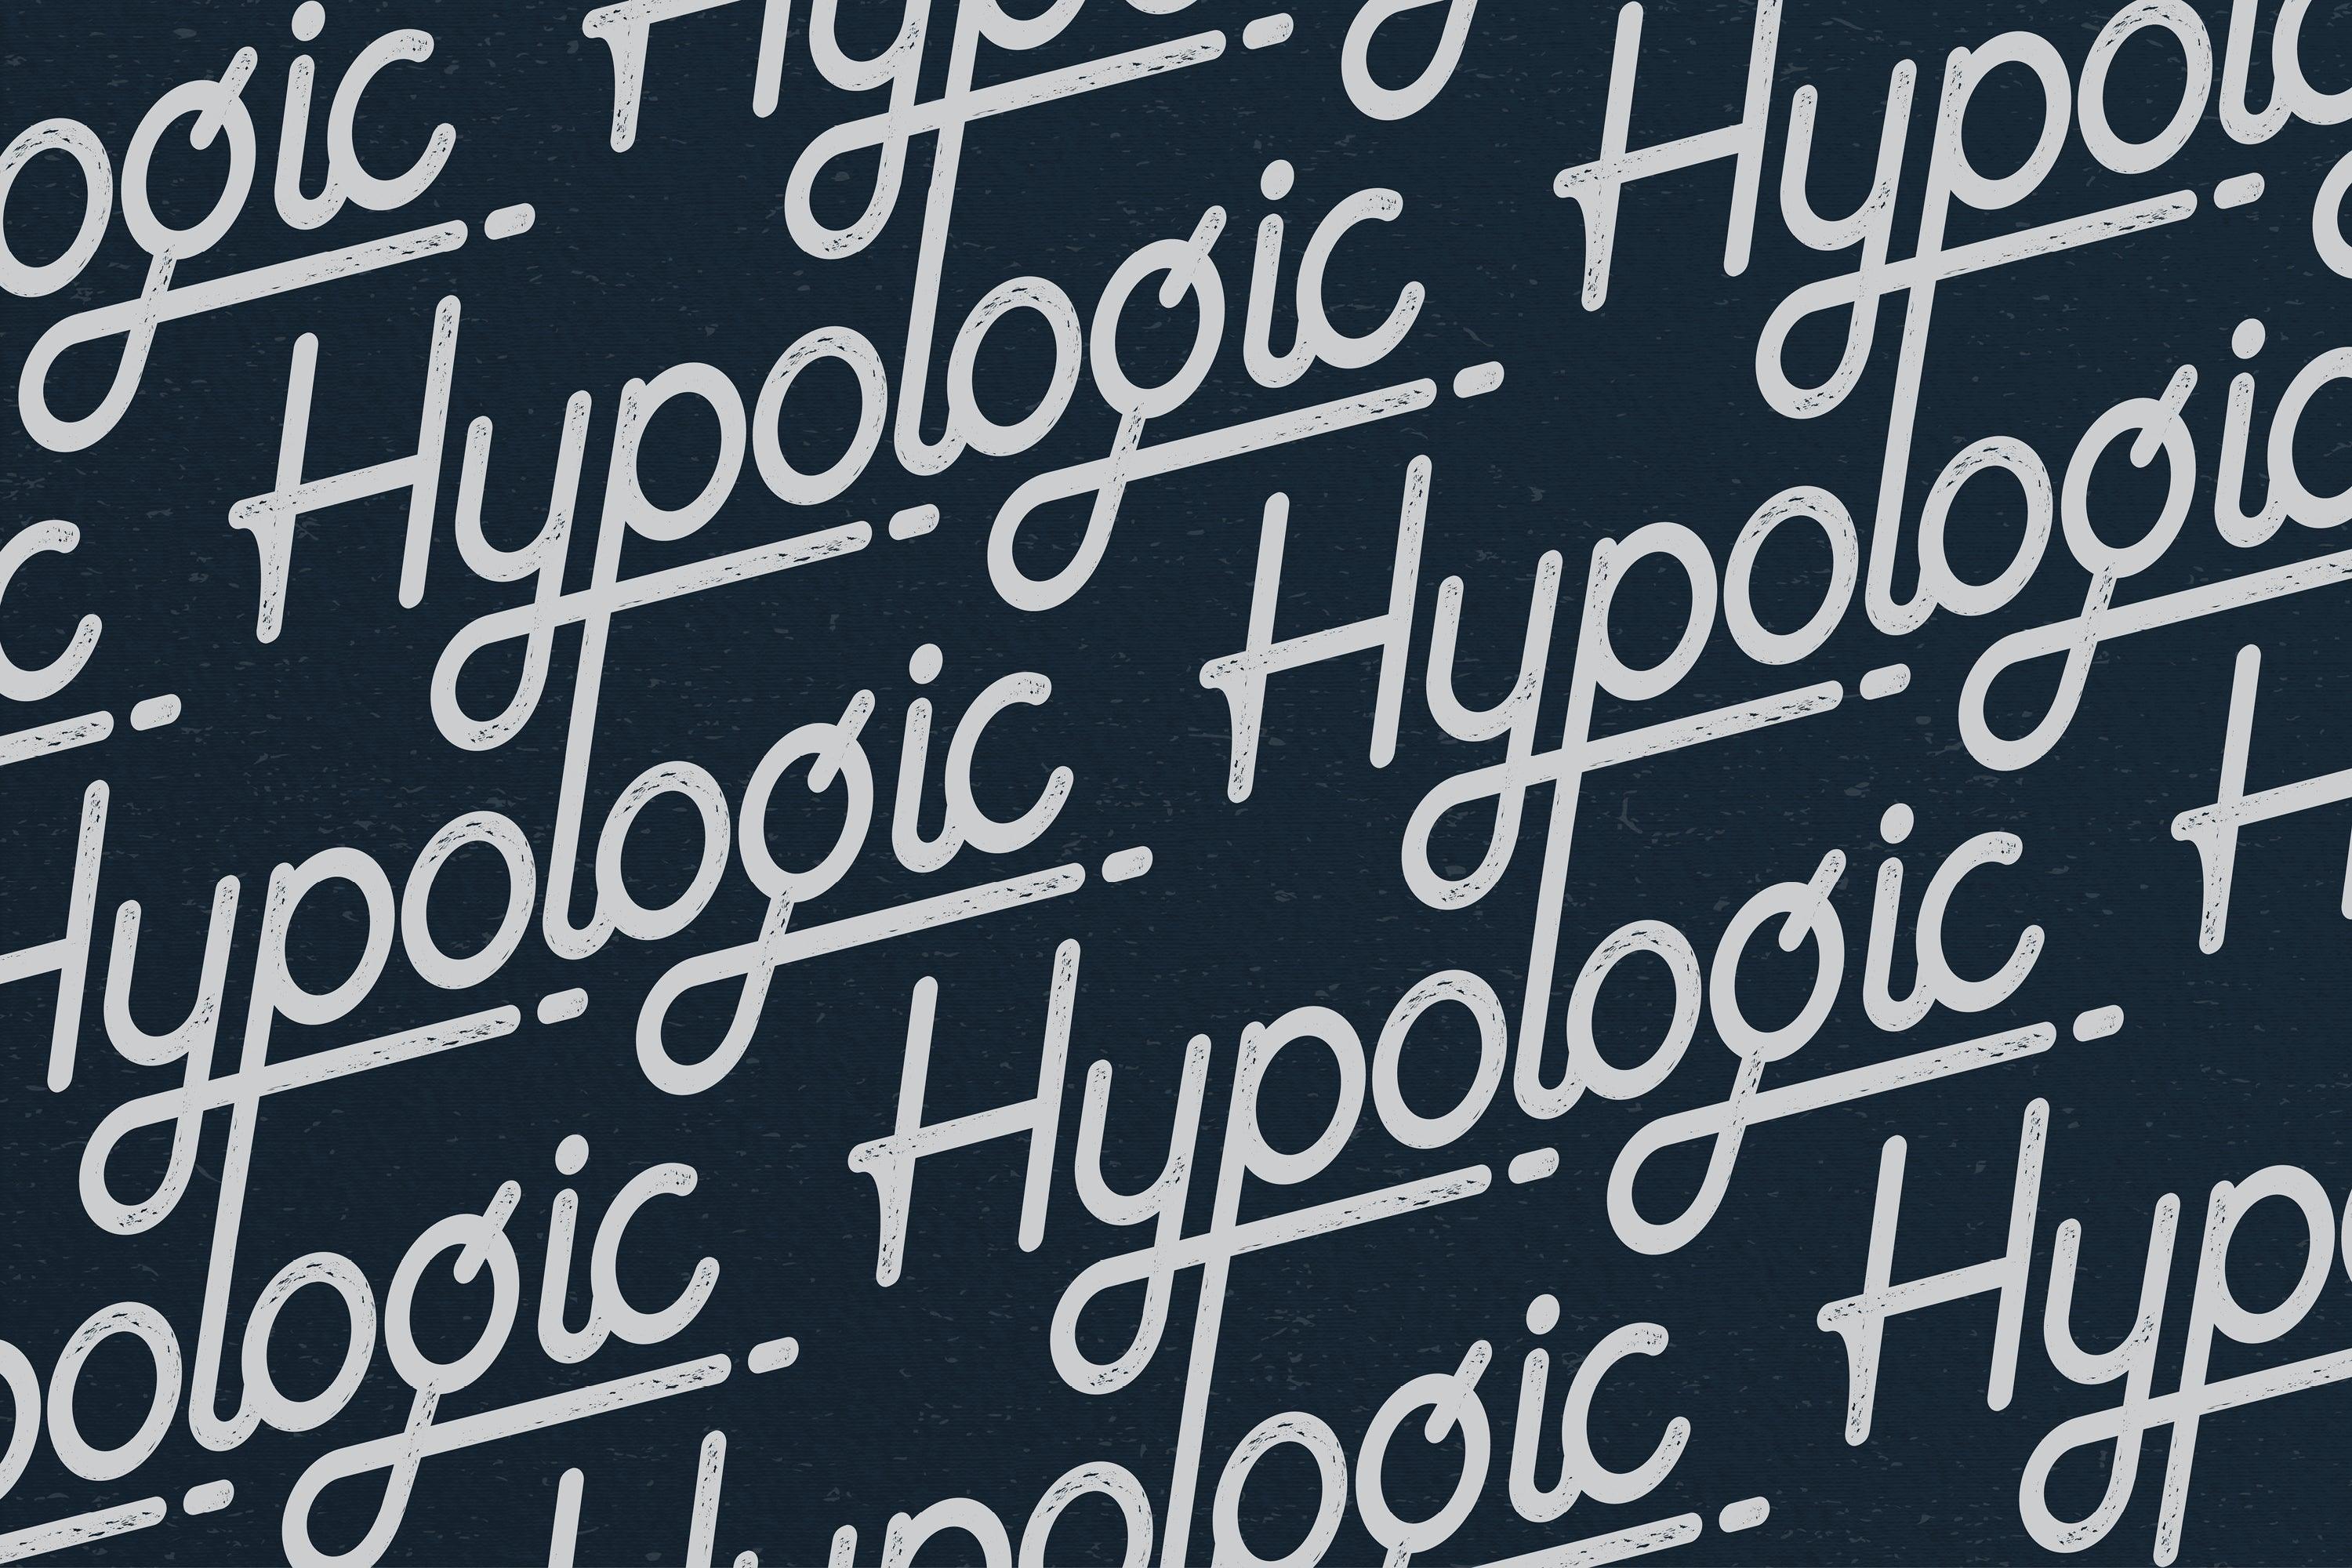 Hypologic - Modern Monoline Script Font - Kreafolk